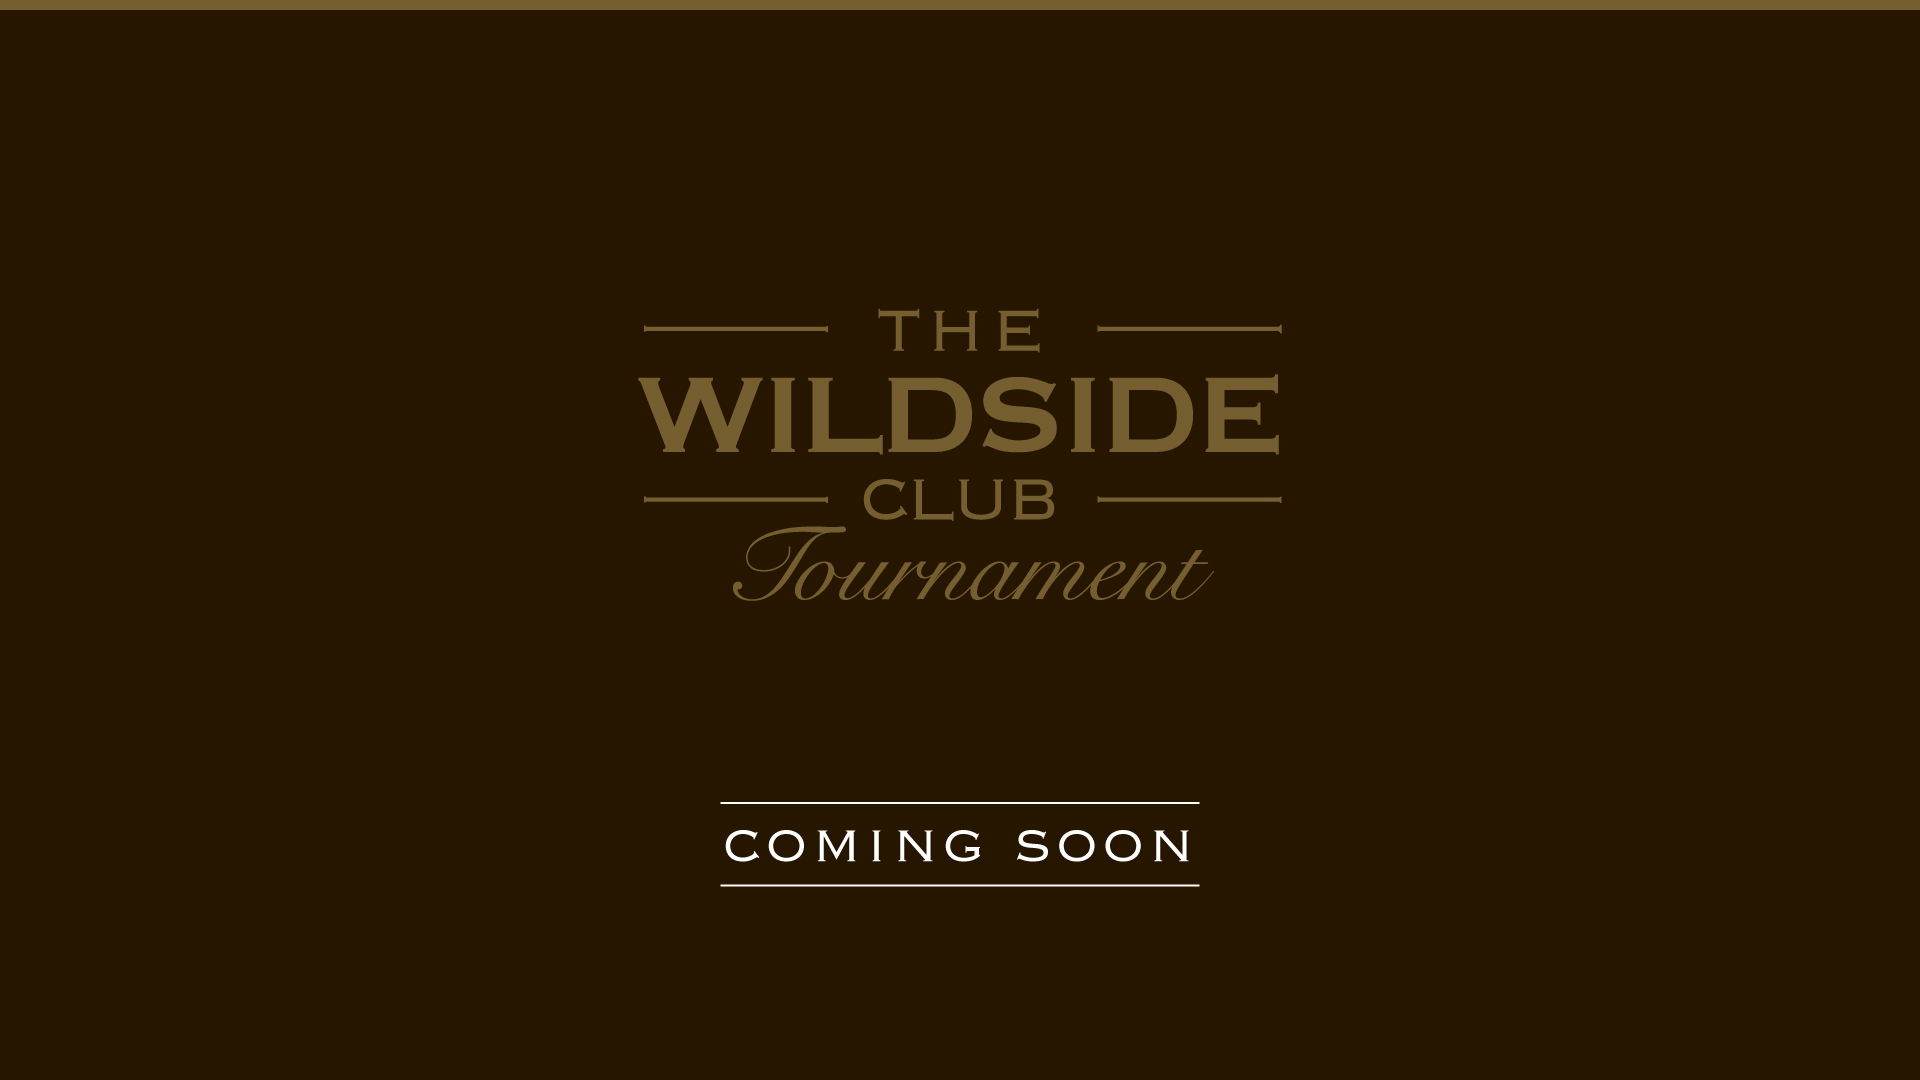 The Wildside Club